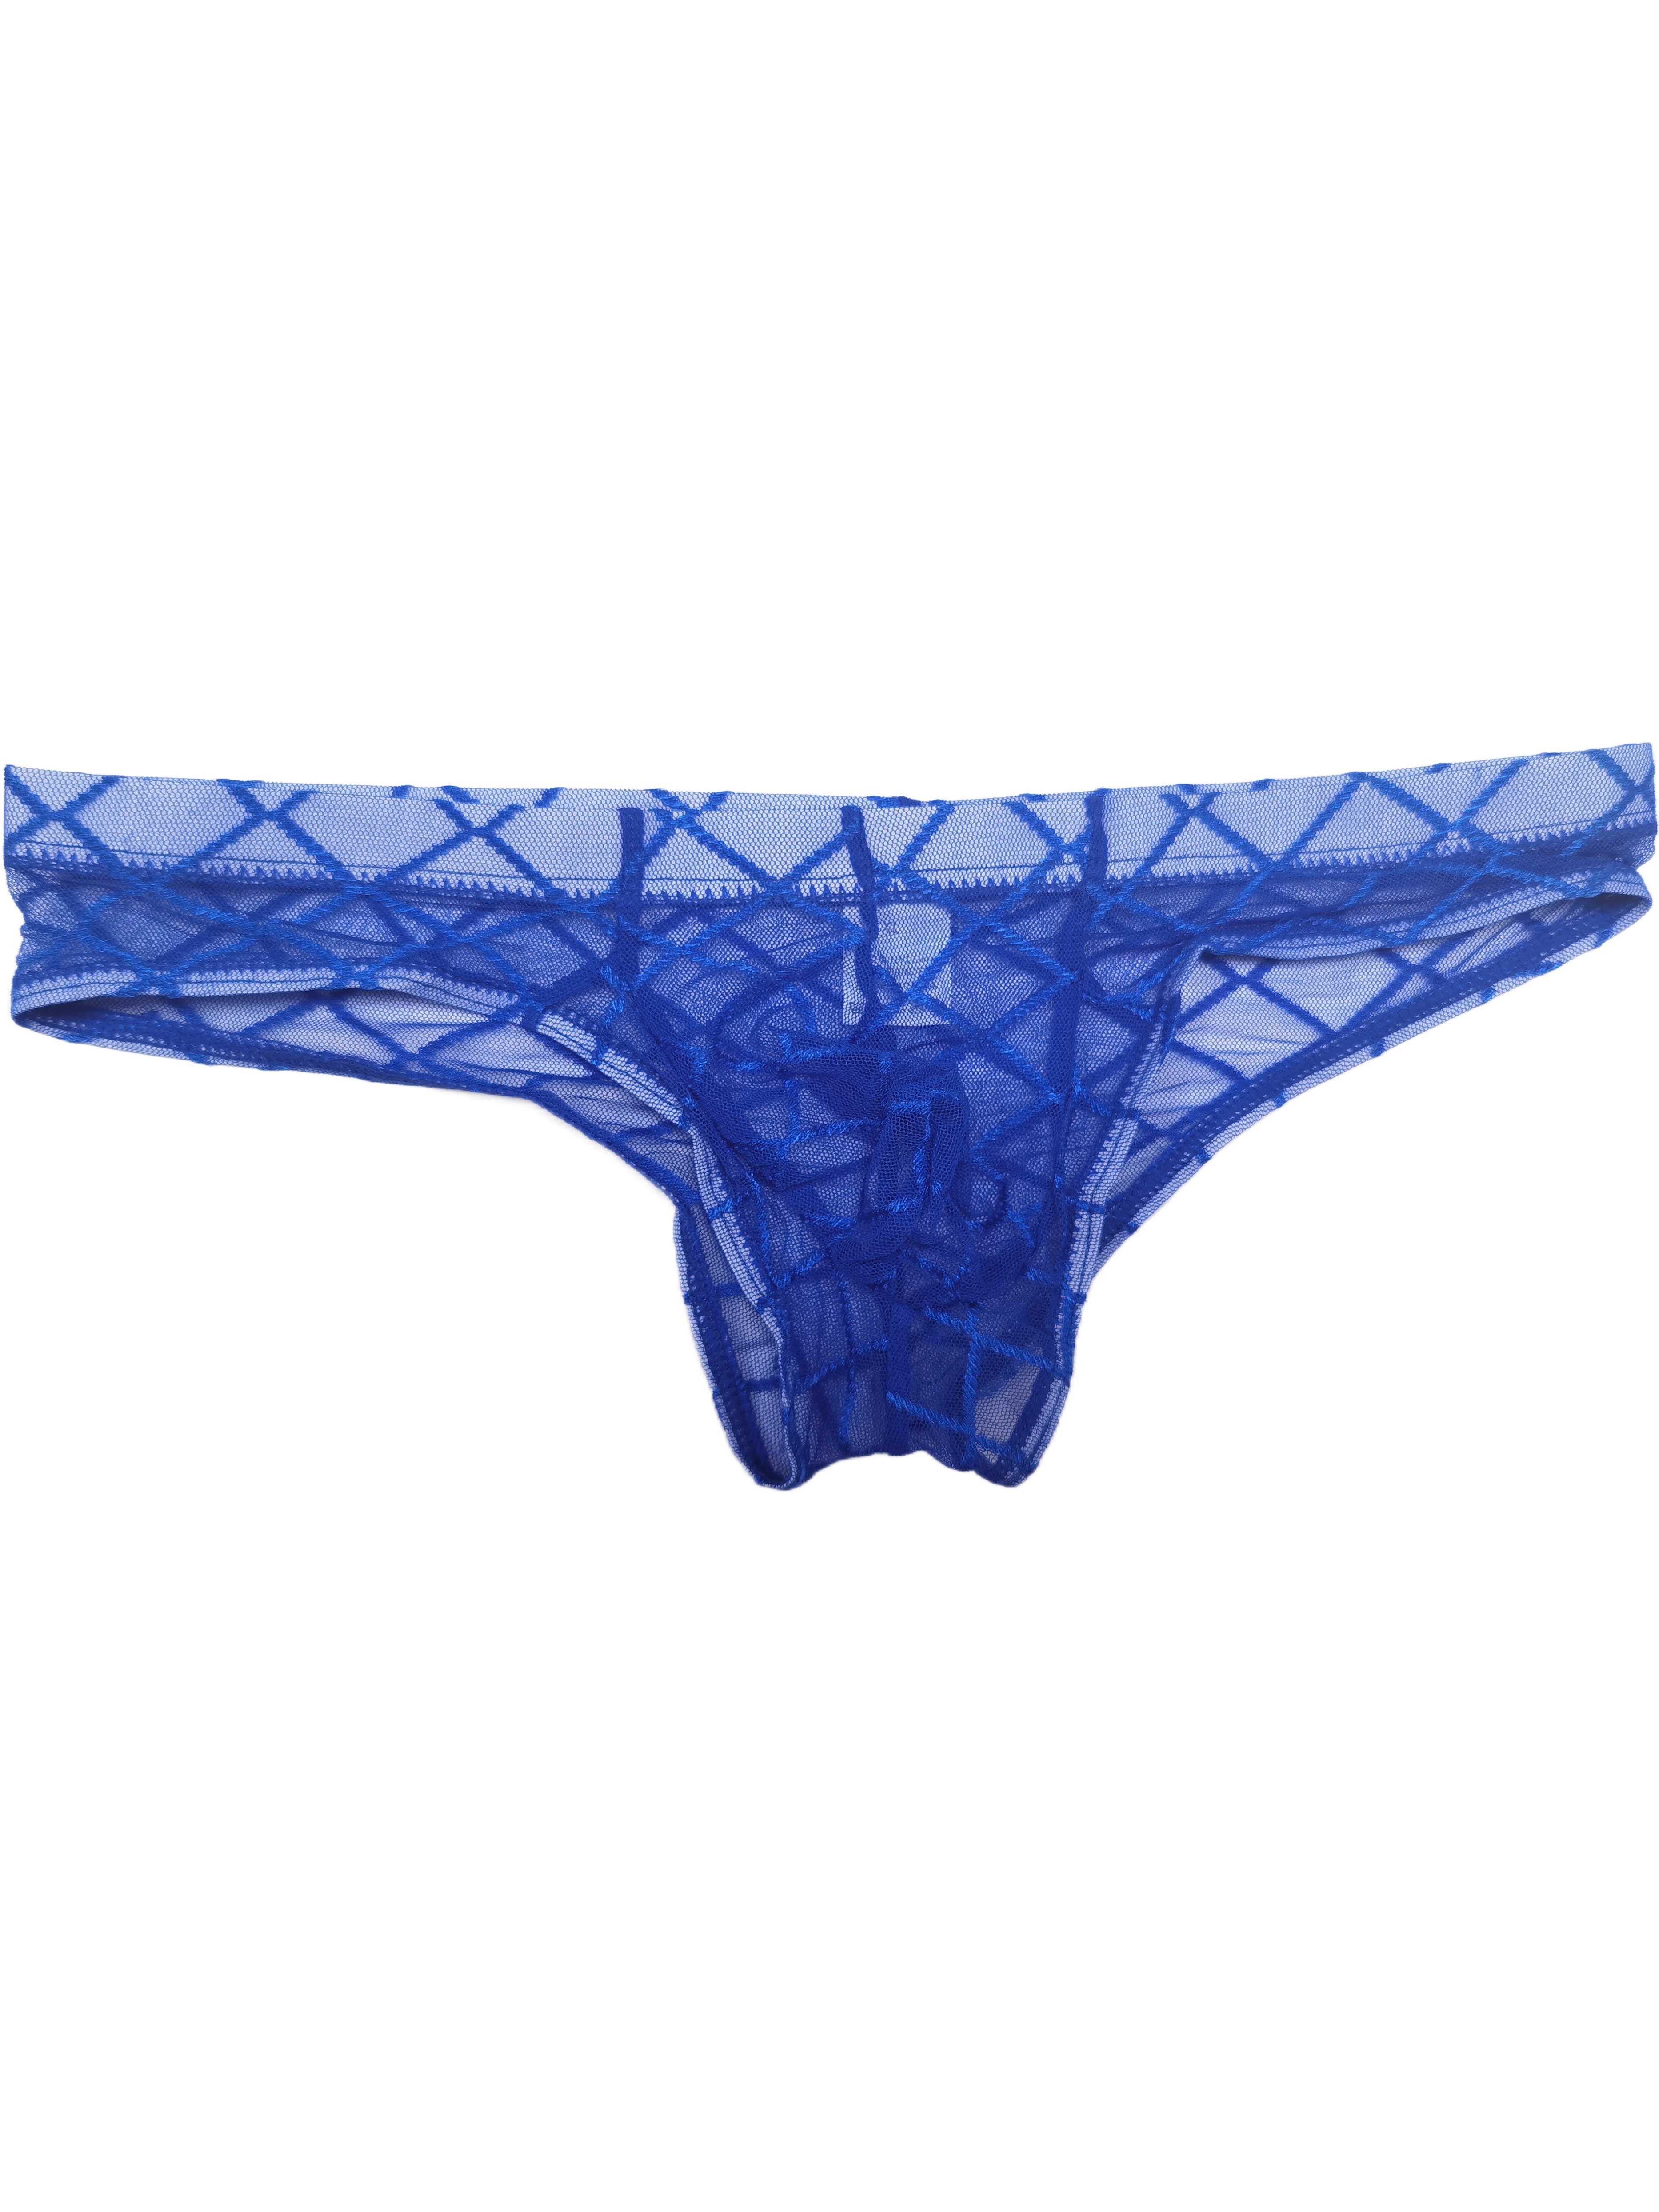  Underpants T Underwear Ice Transparent Low Crotch Fun